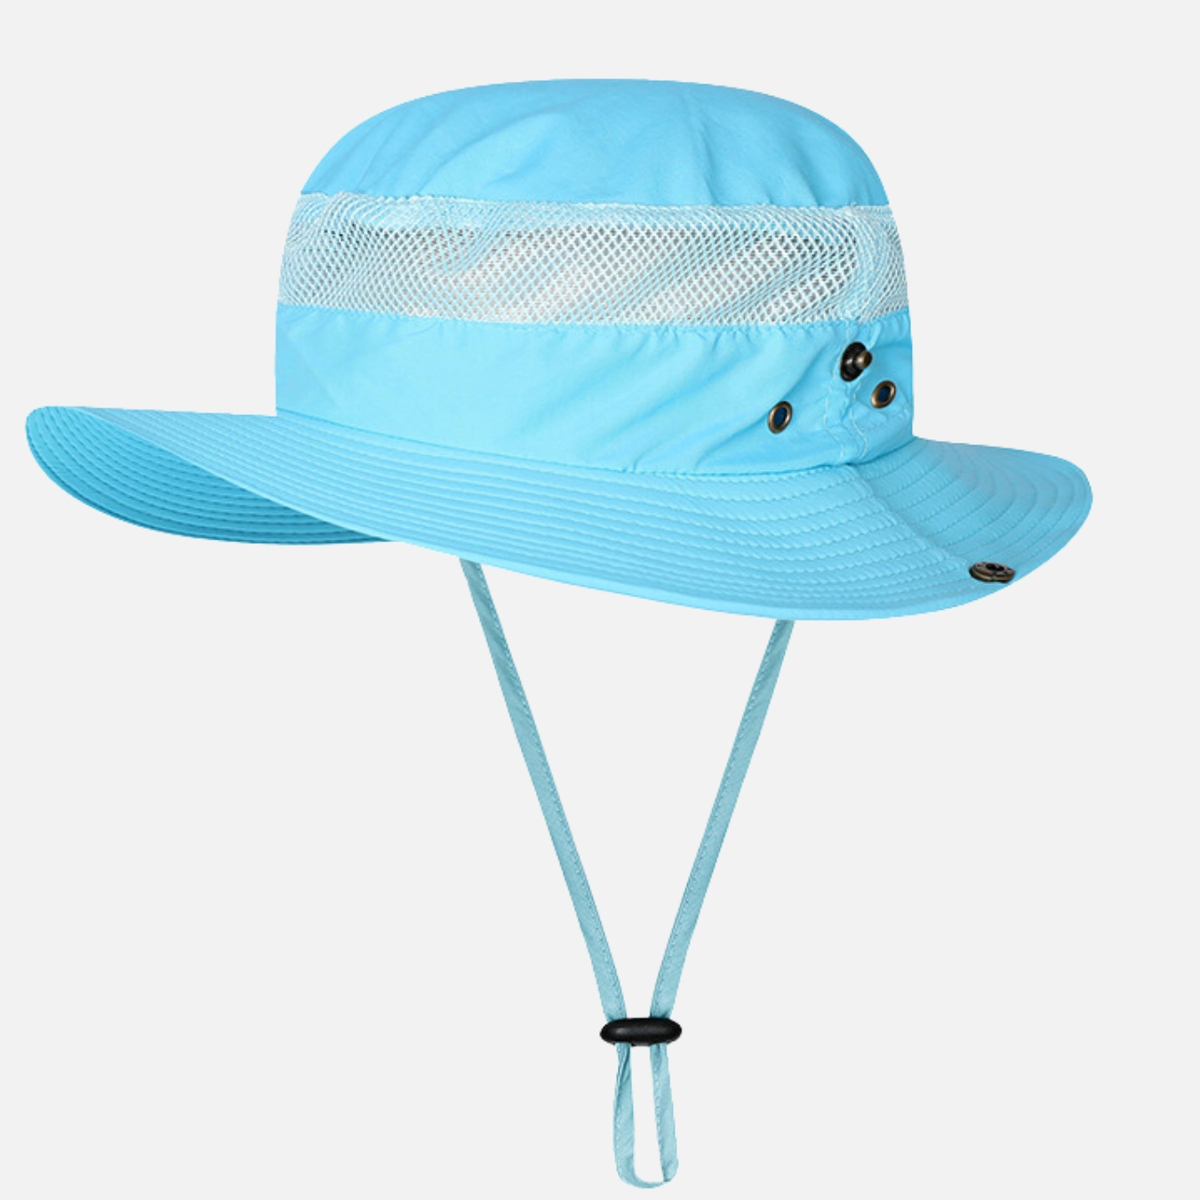 Voyage כובע טיולים רחב שוליים - כחול בהיר פריט שני ב - 35% הנחה 